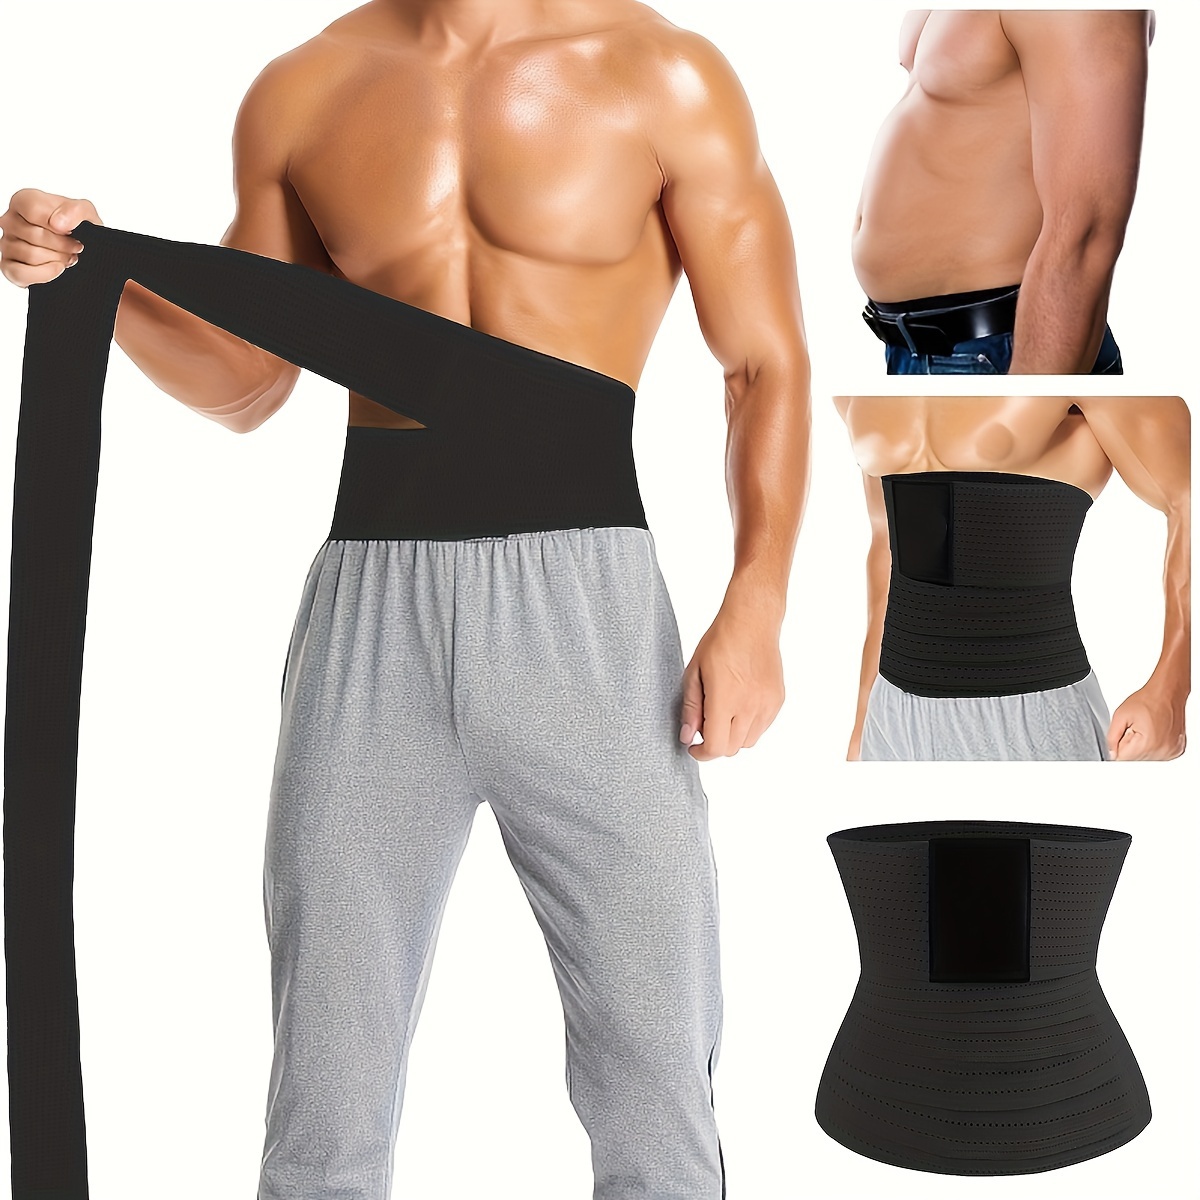 Men's Neoprene Back Support Waist Trainer Corset Slimming Body Shaper Sweat  Band, Body Shaper For Workout Fitness